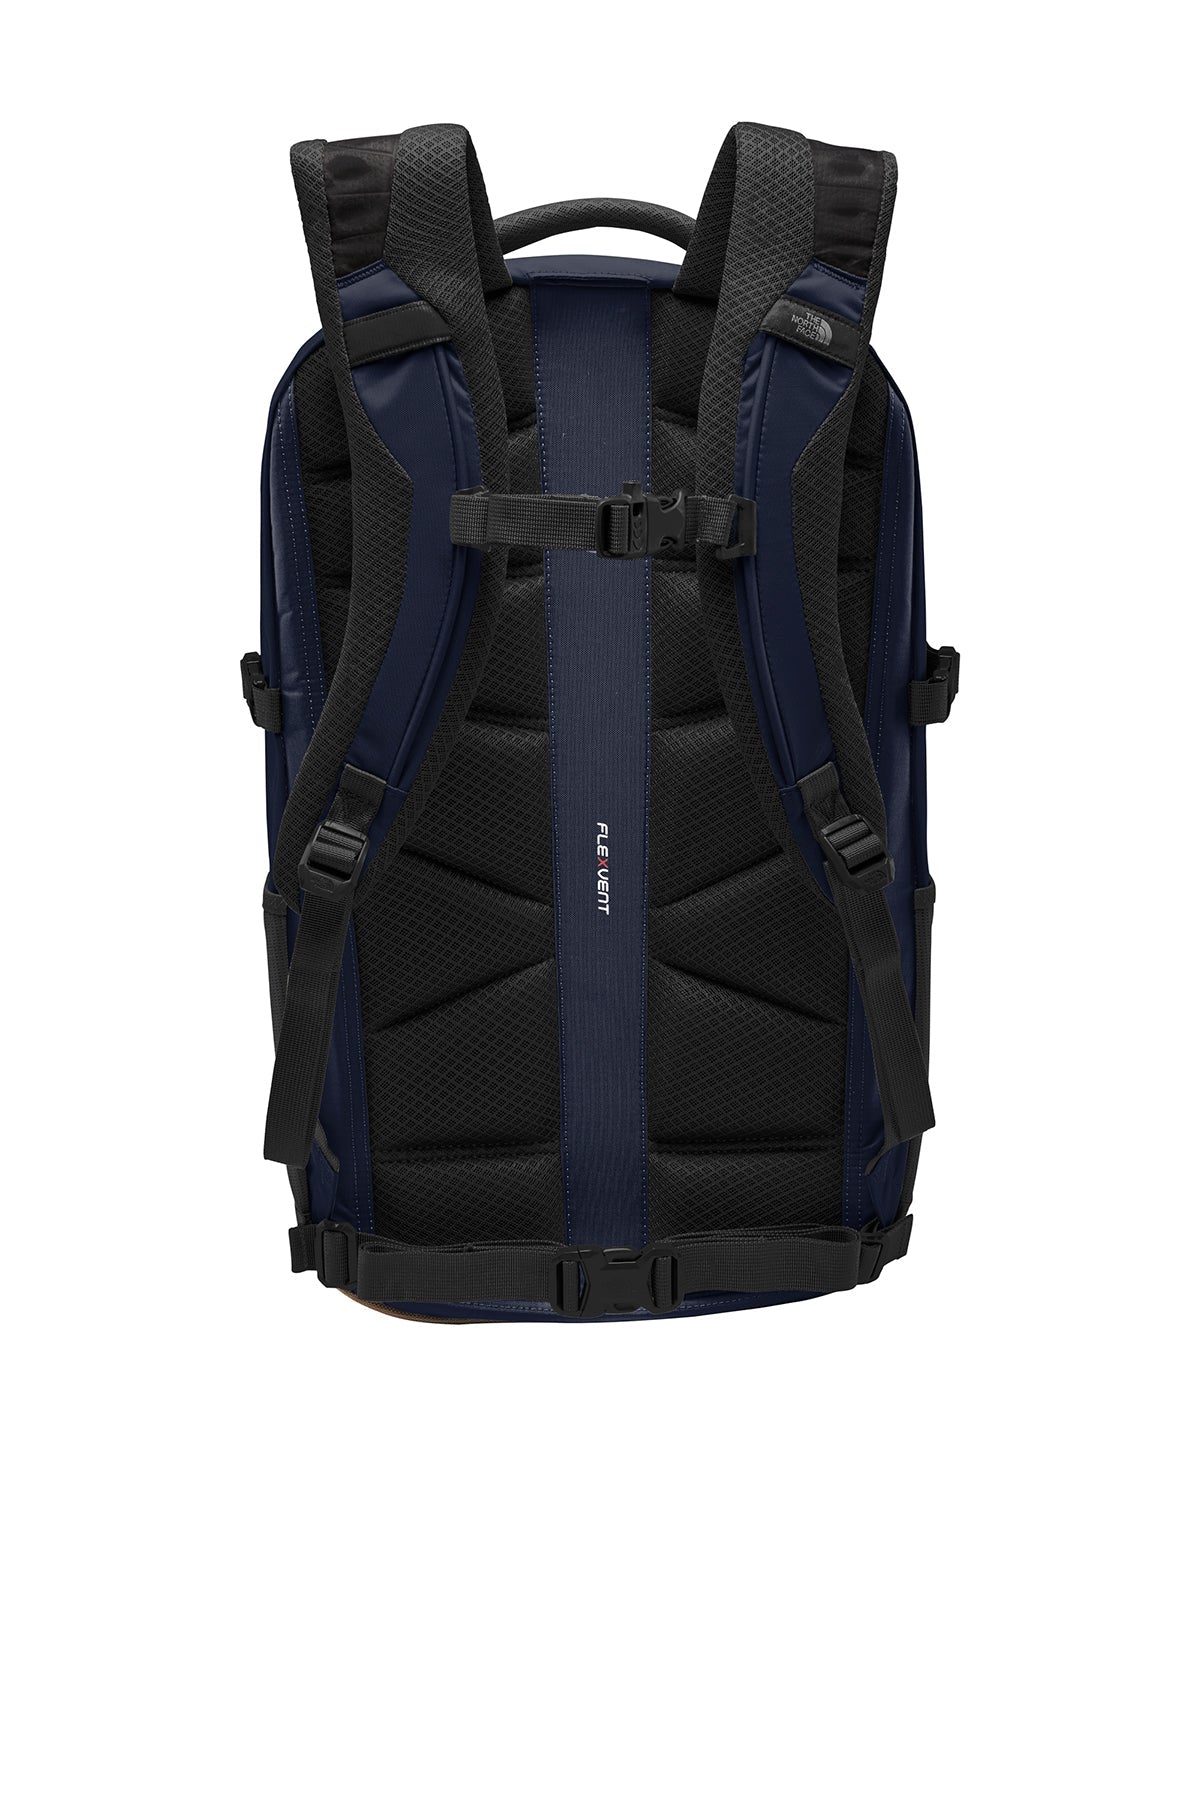 North Face Fall Line Backpack Cosmic Blue/ Asphalt Grey